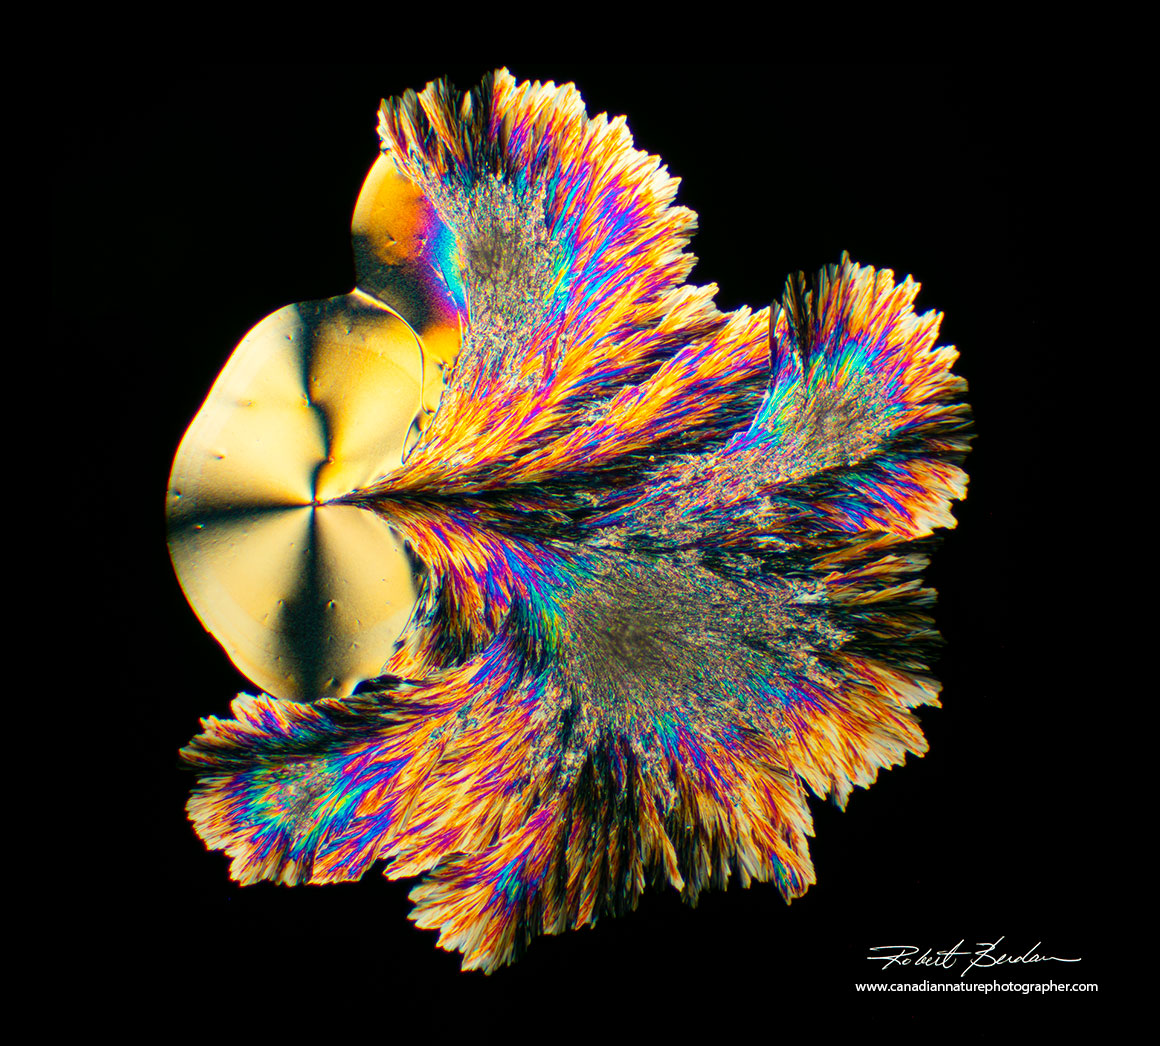 Vitamin C crystal  polarized light microscopy by Robert Berdan ©